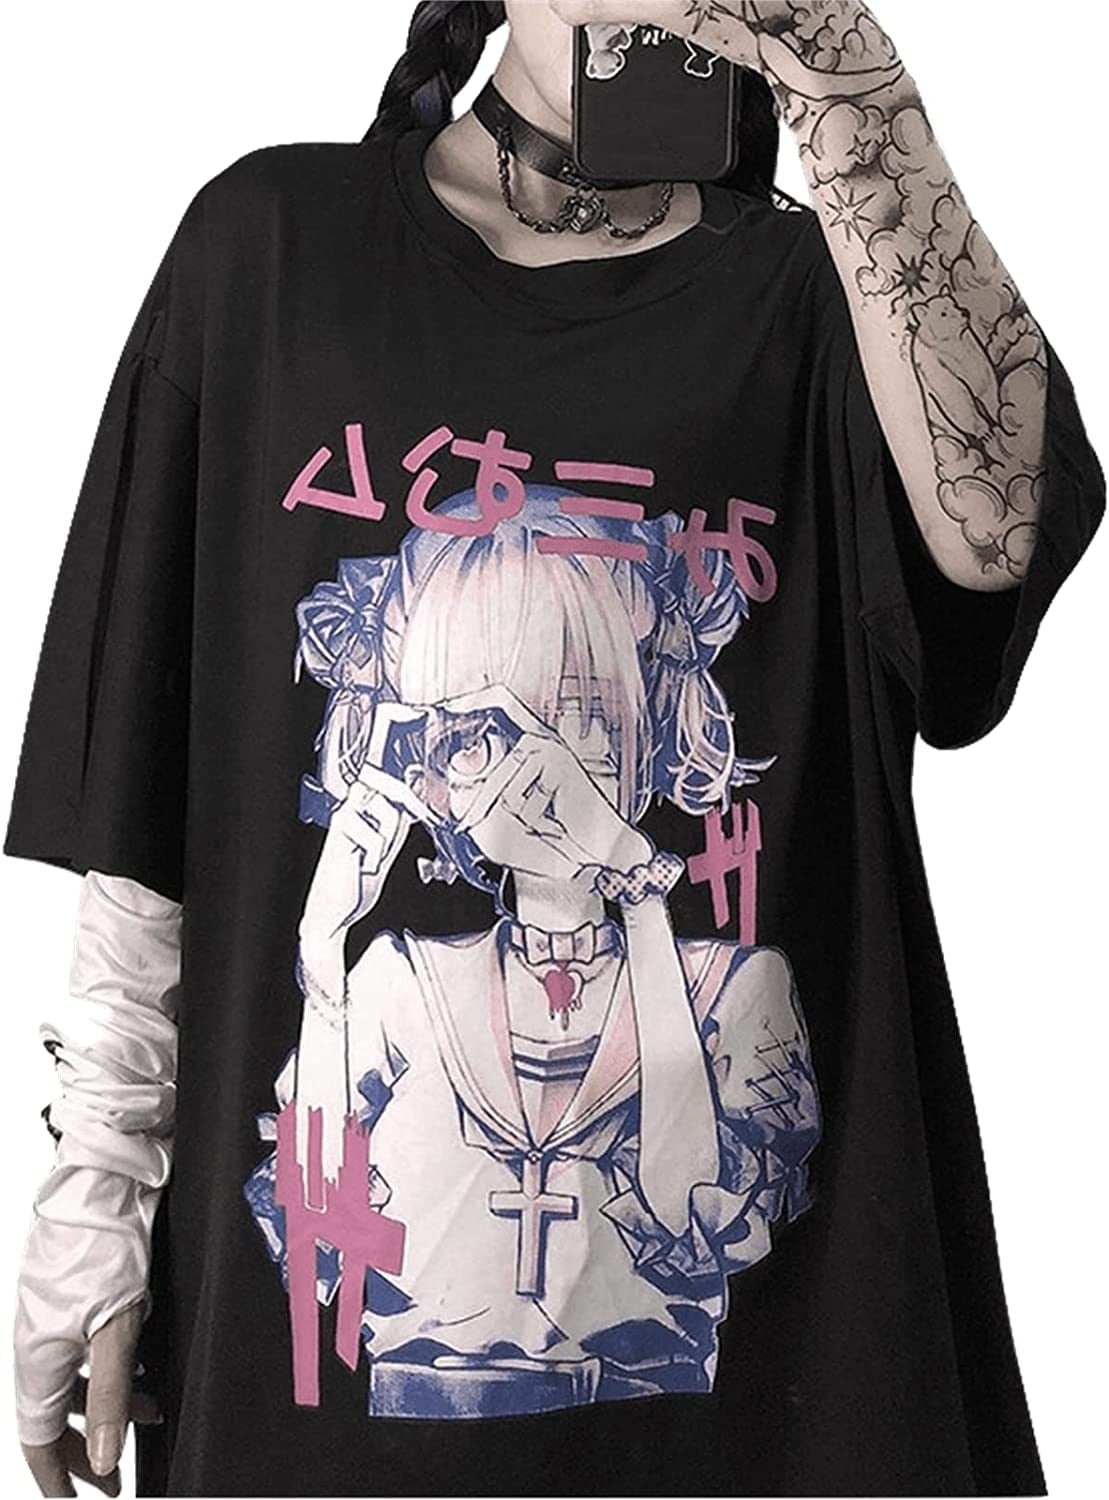 Anime Girl Tee and Sleeves (Black, White)